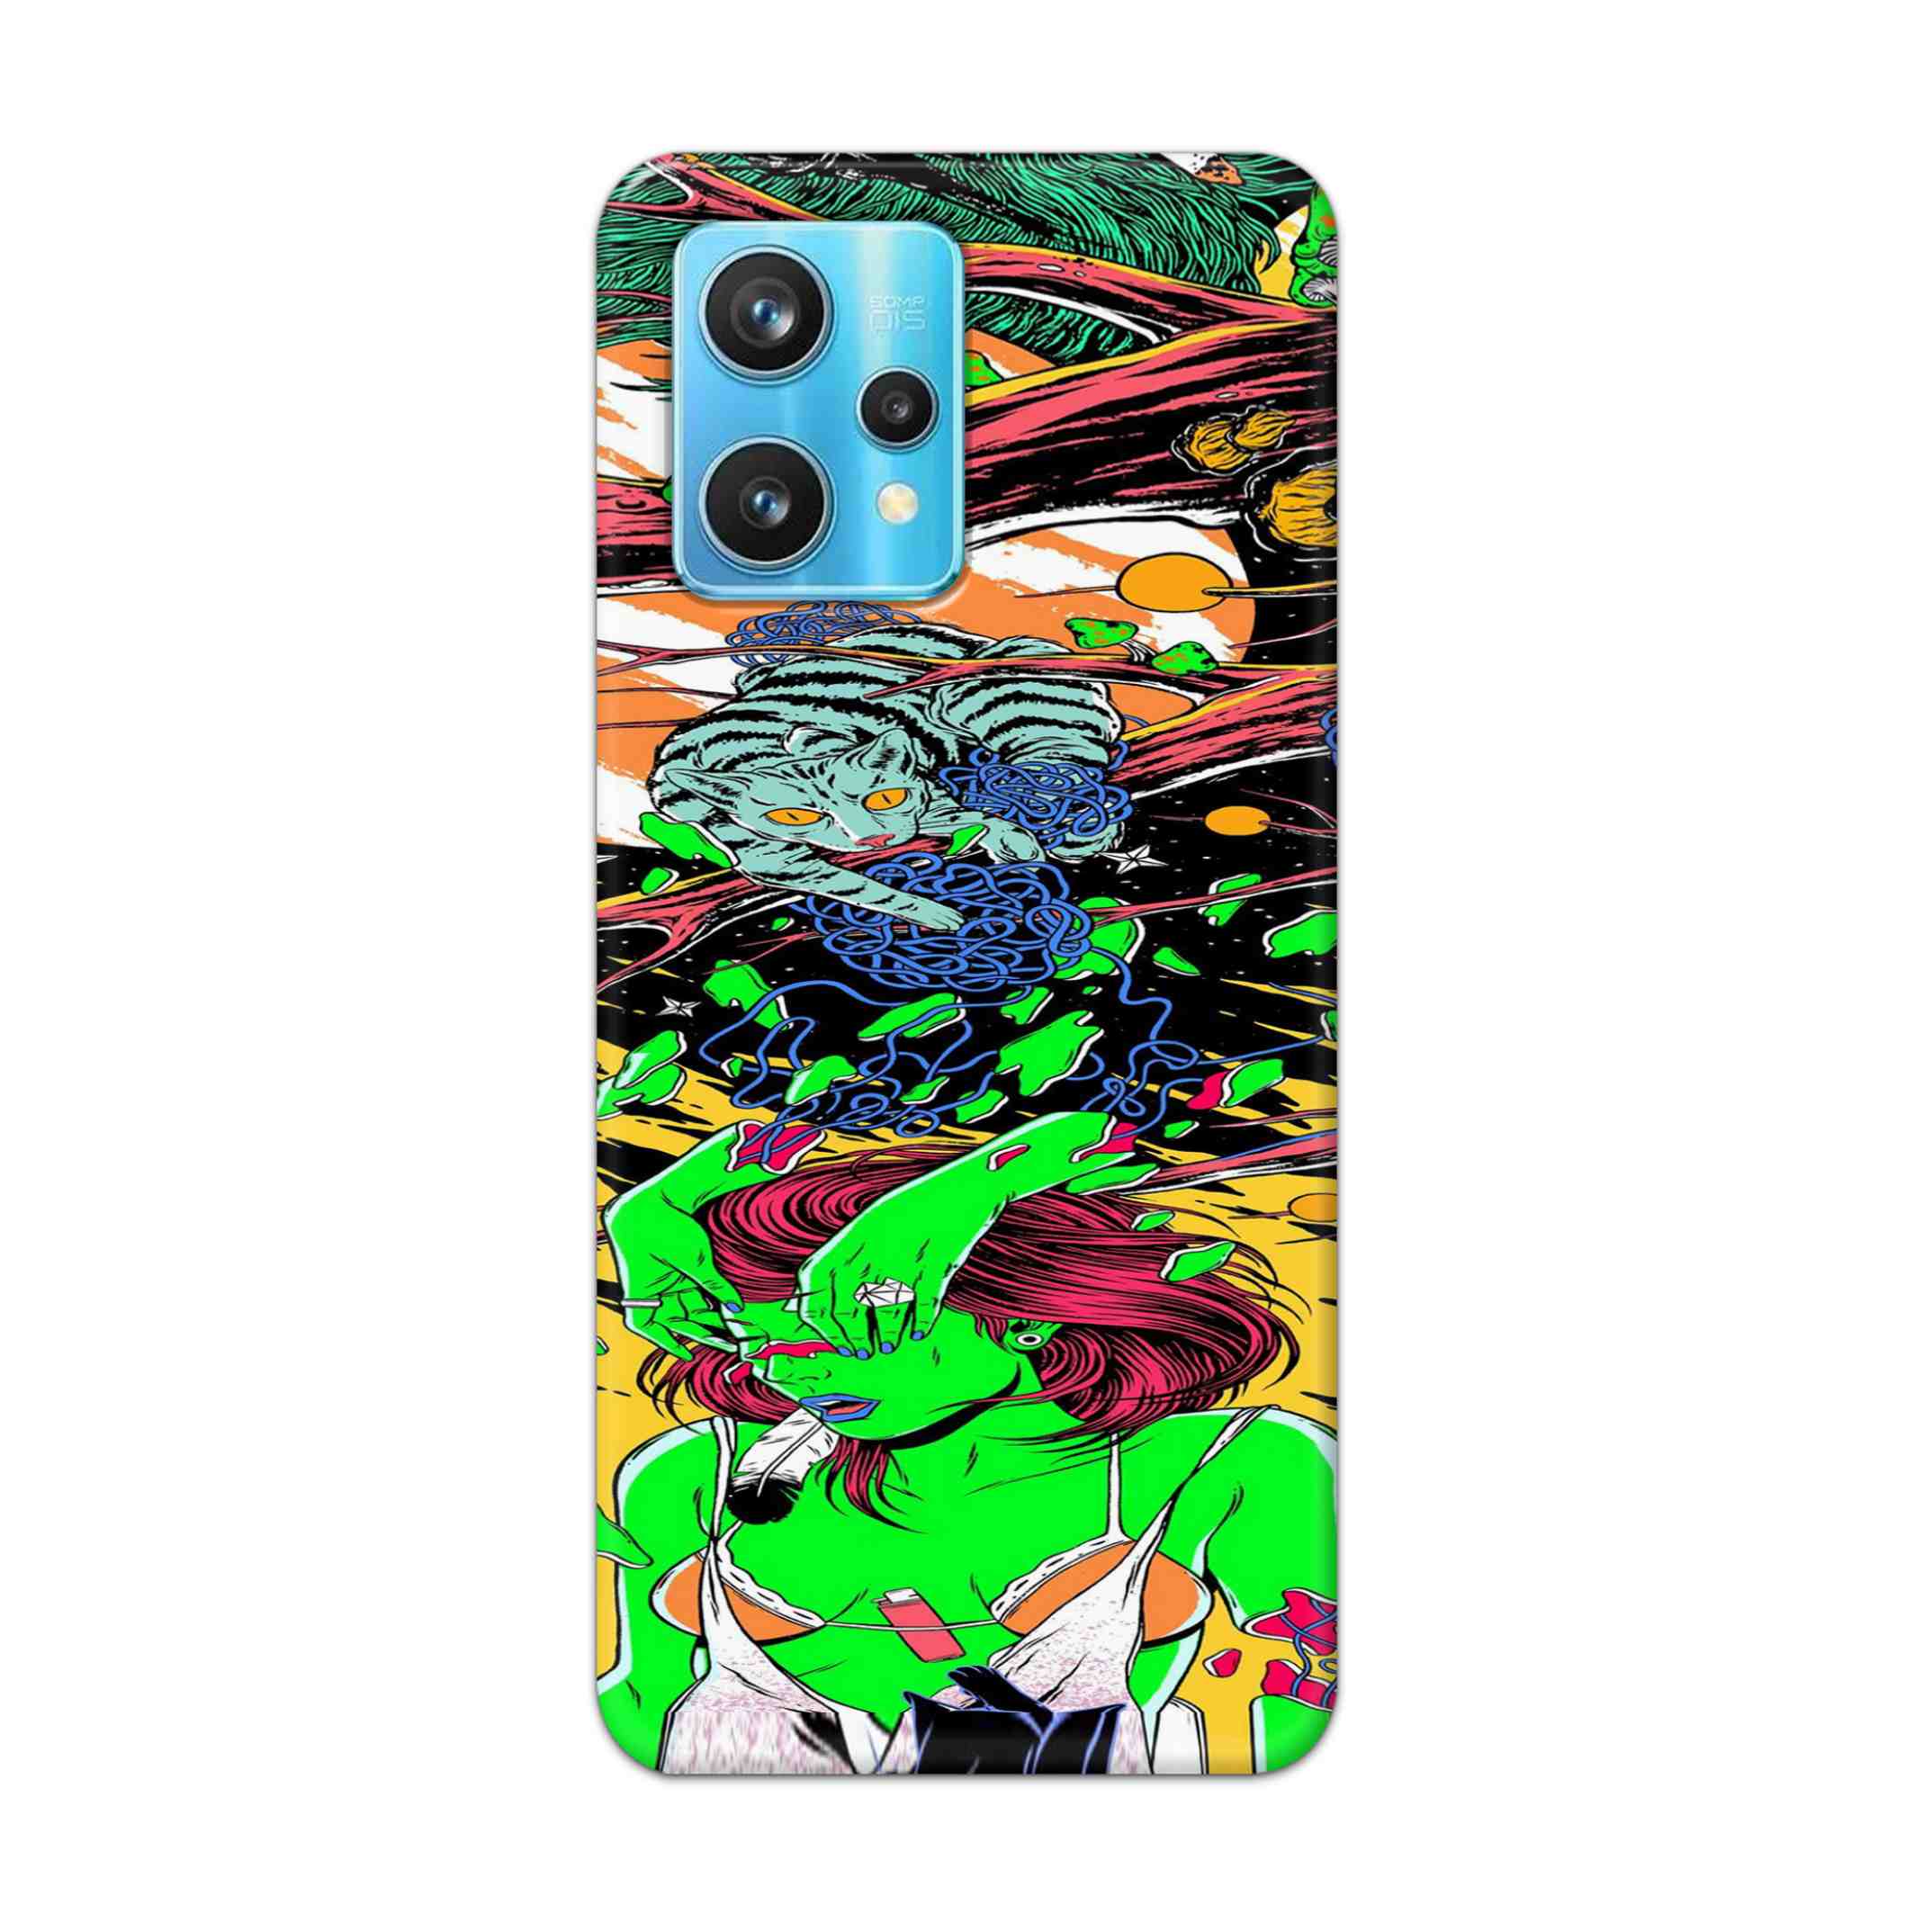 Buy Green Girl Art Hard Back Mobile Phone Case Cover For Realme 9 Pro Plus Online